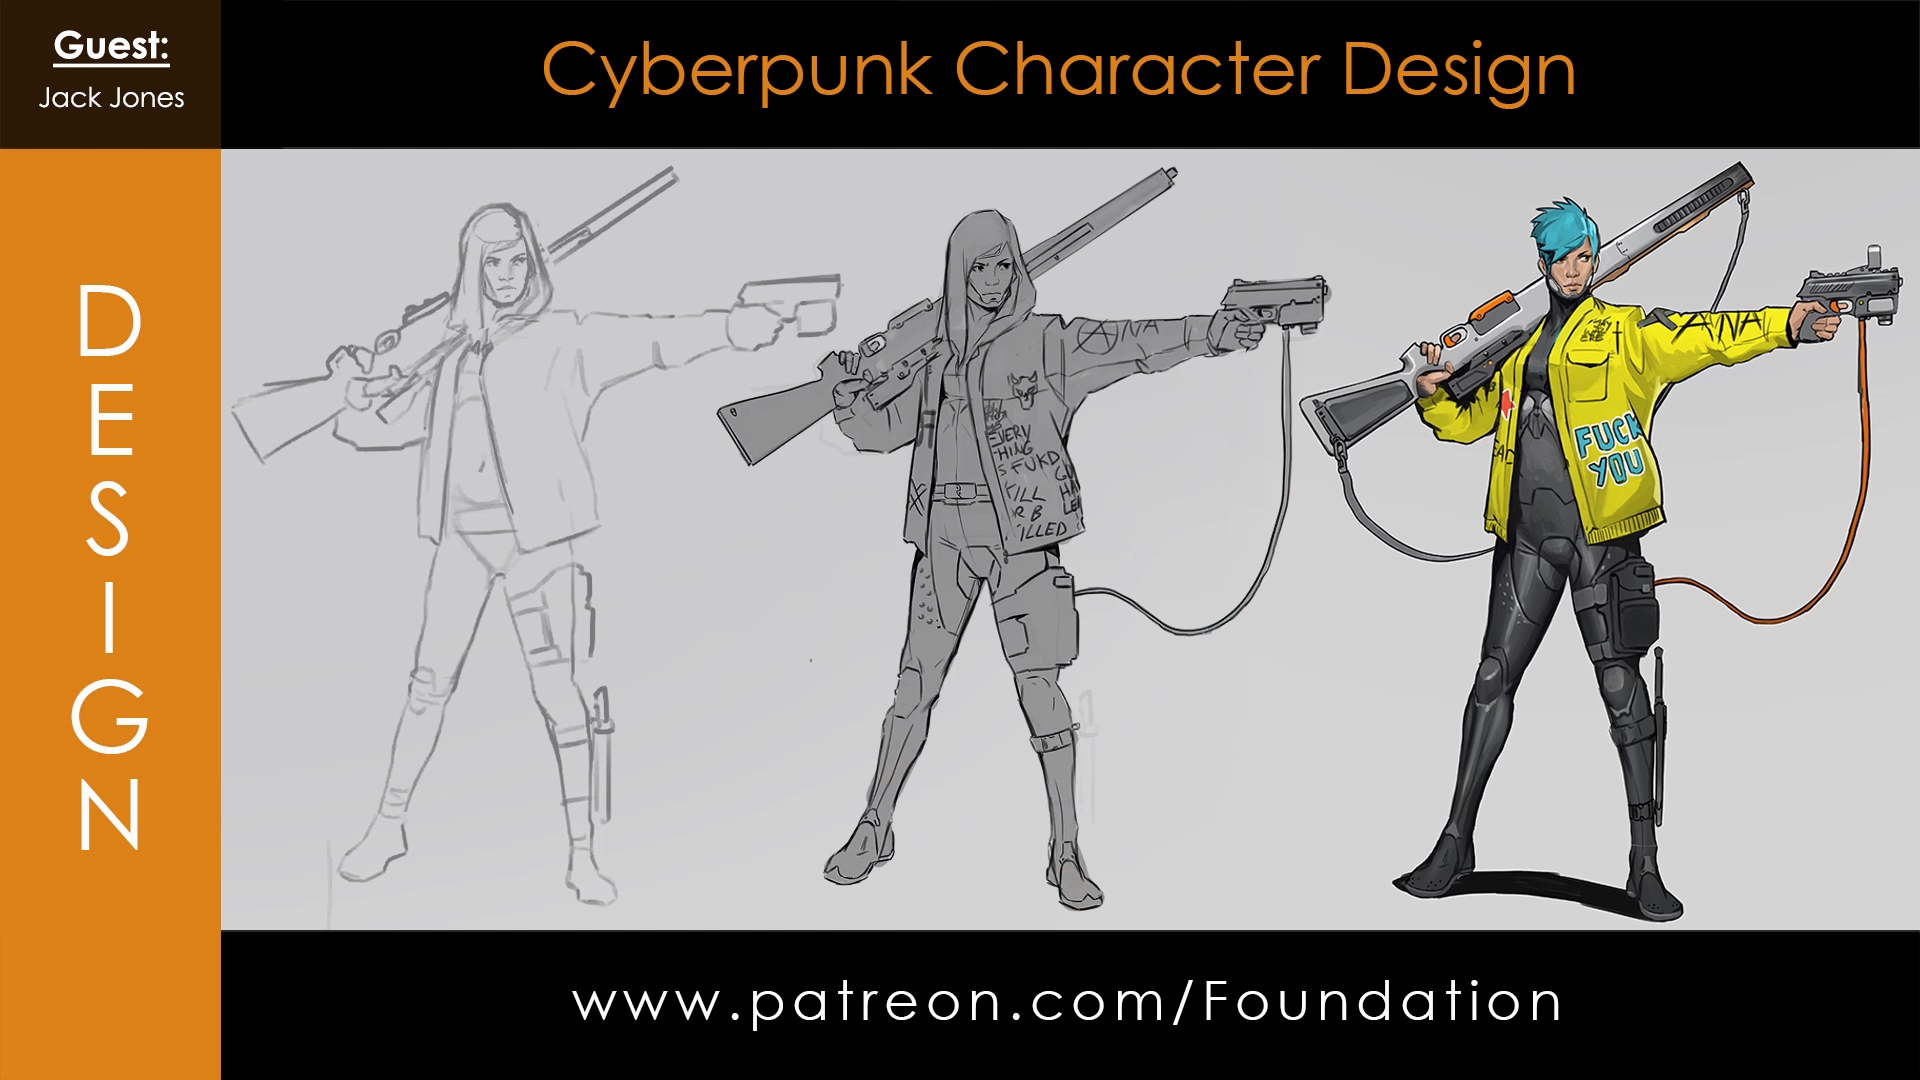 Cyberpunk Character Design with Jack Jones